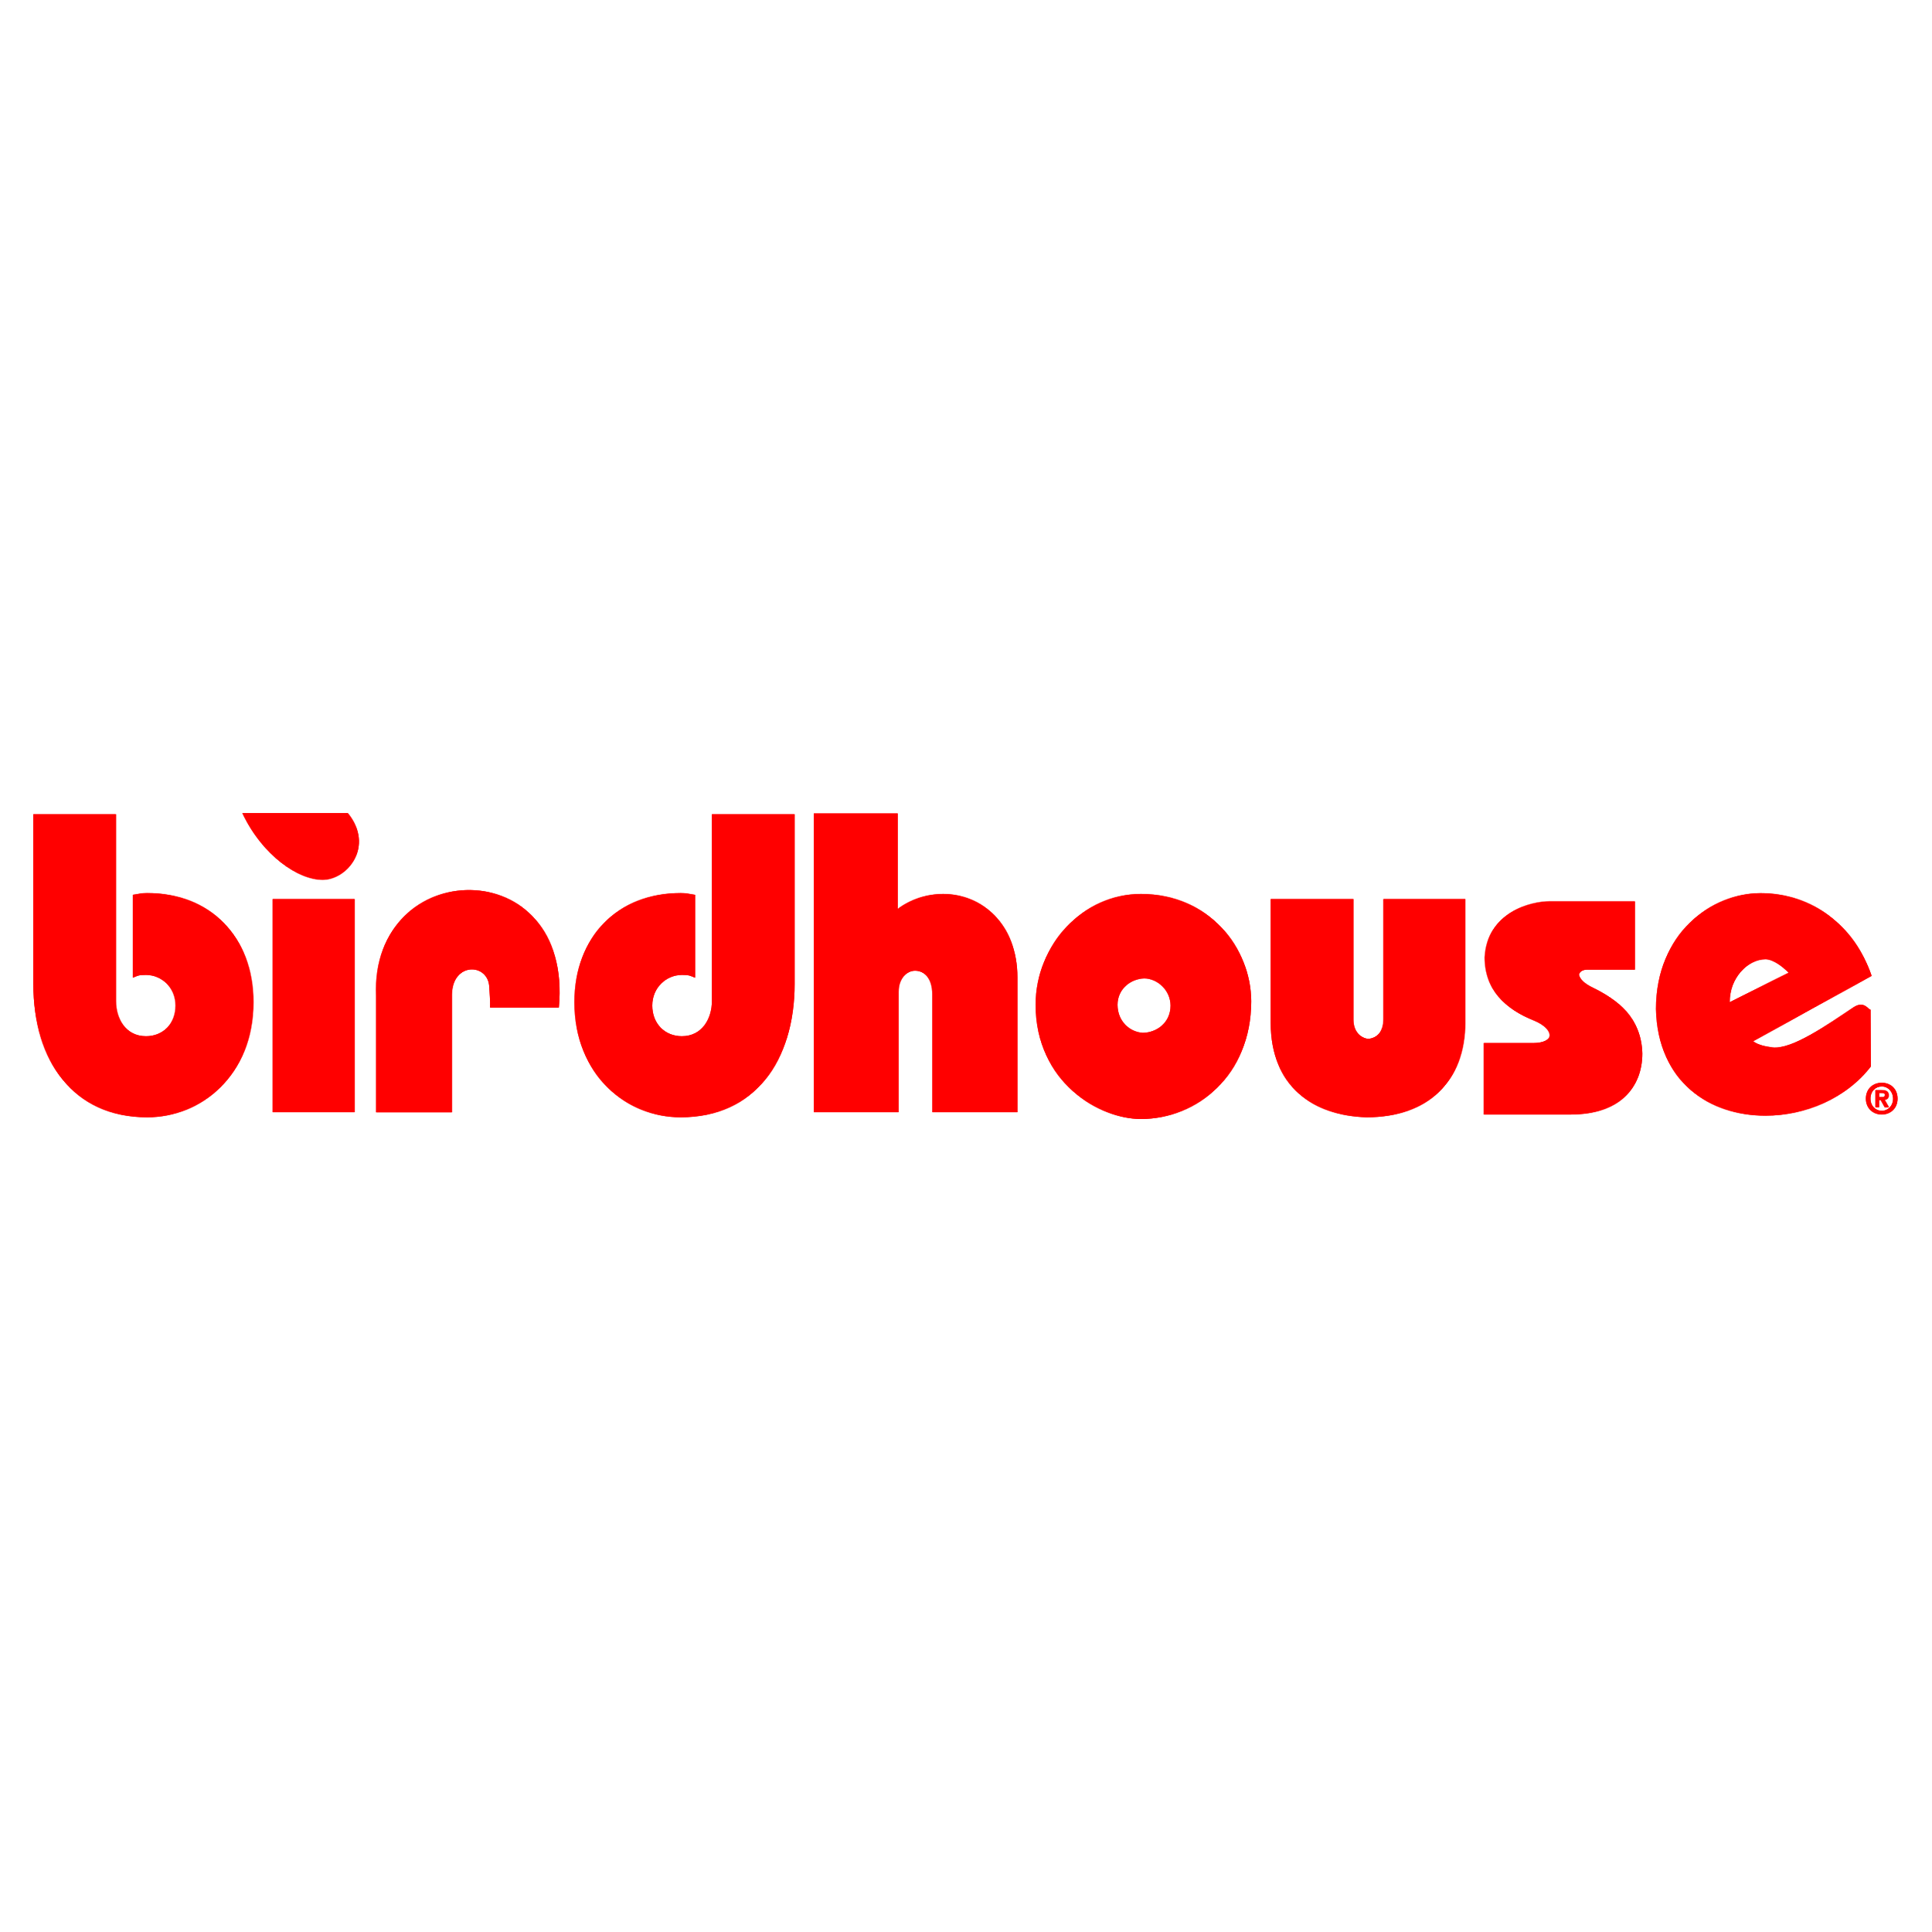 Birdhouse Skateboards Logo Transparent Picture